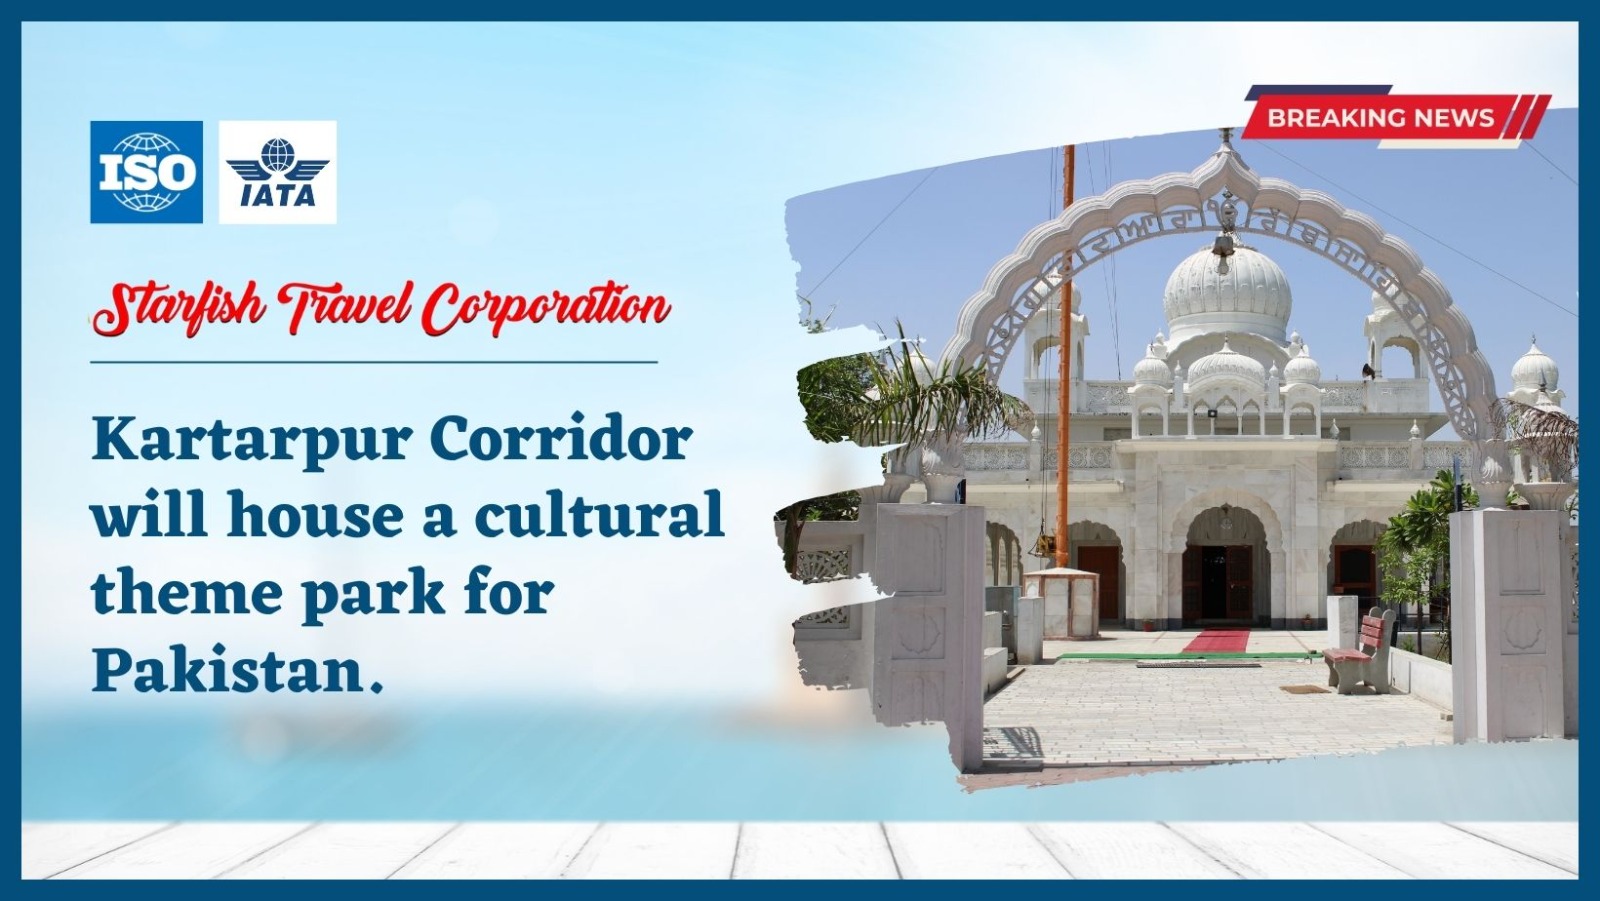 Kartarpur Corridor will house a cultural theme park for Pakistan.